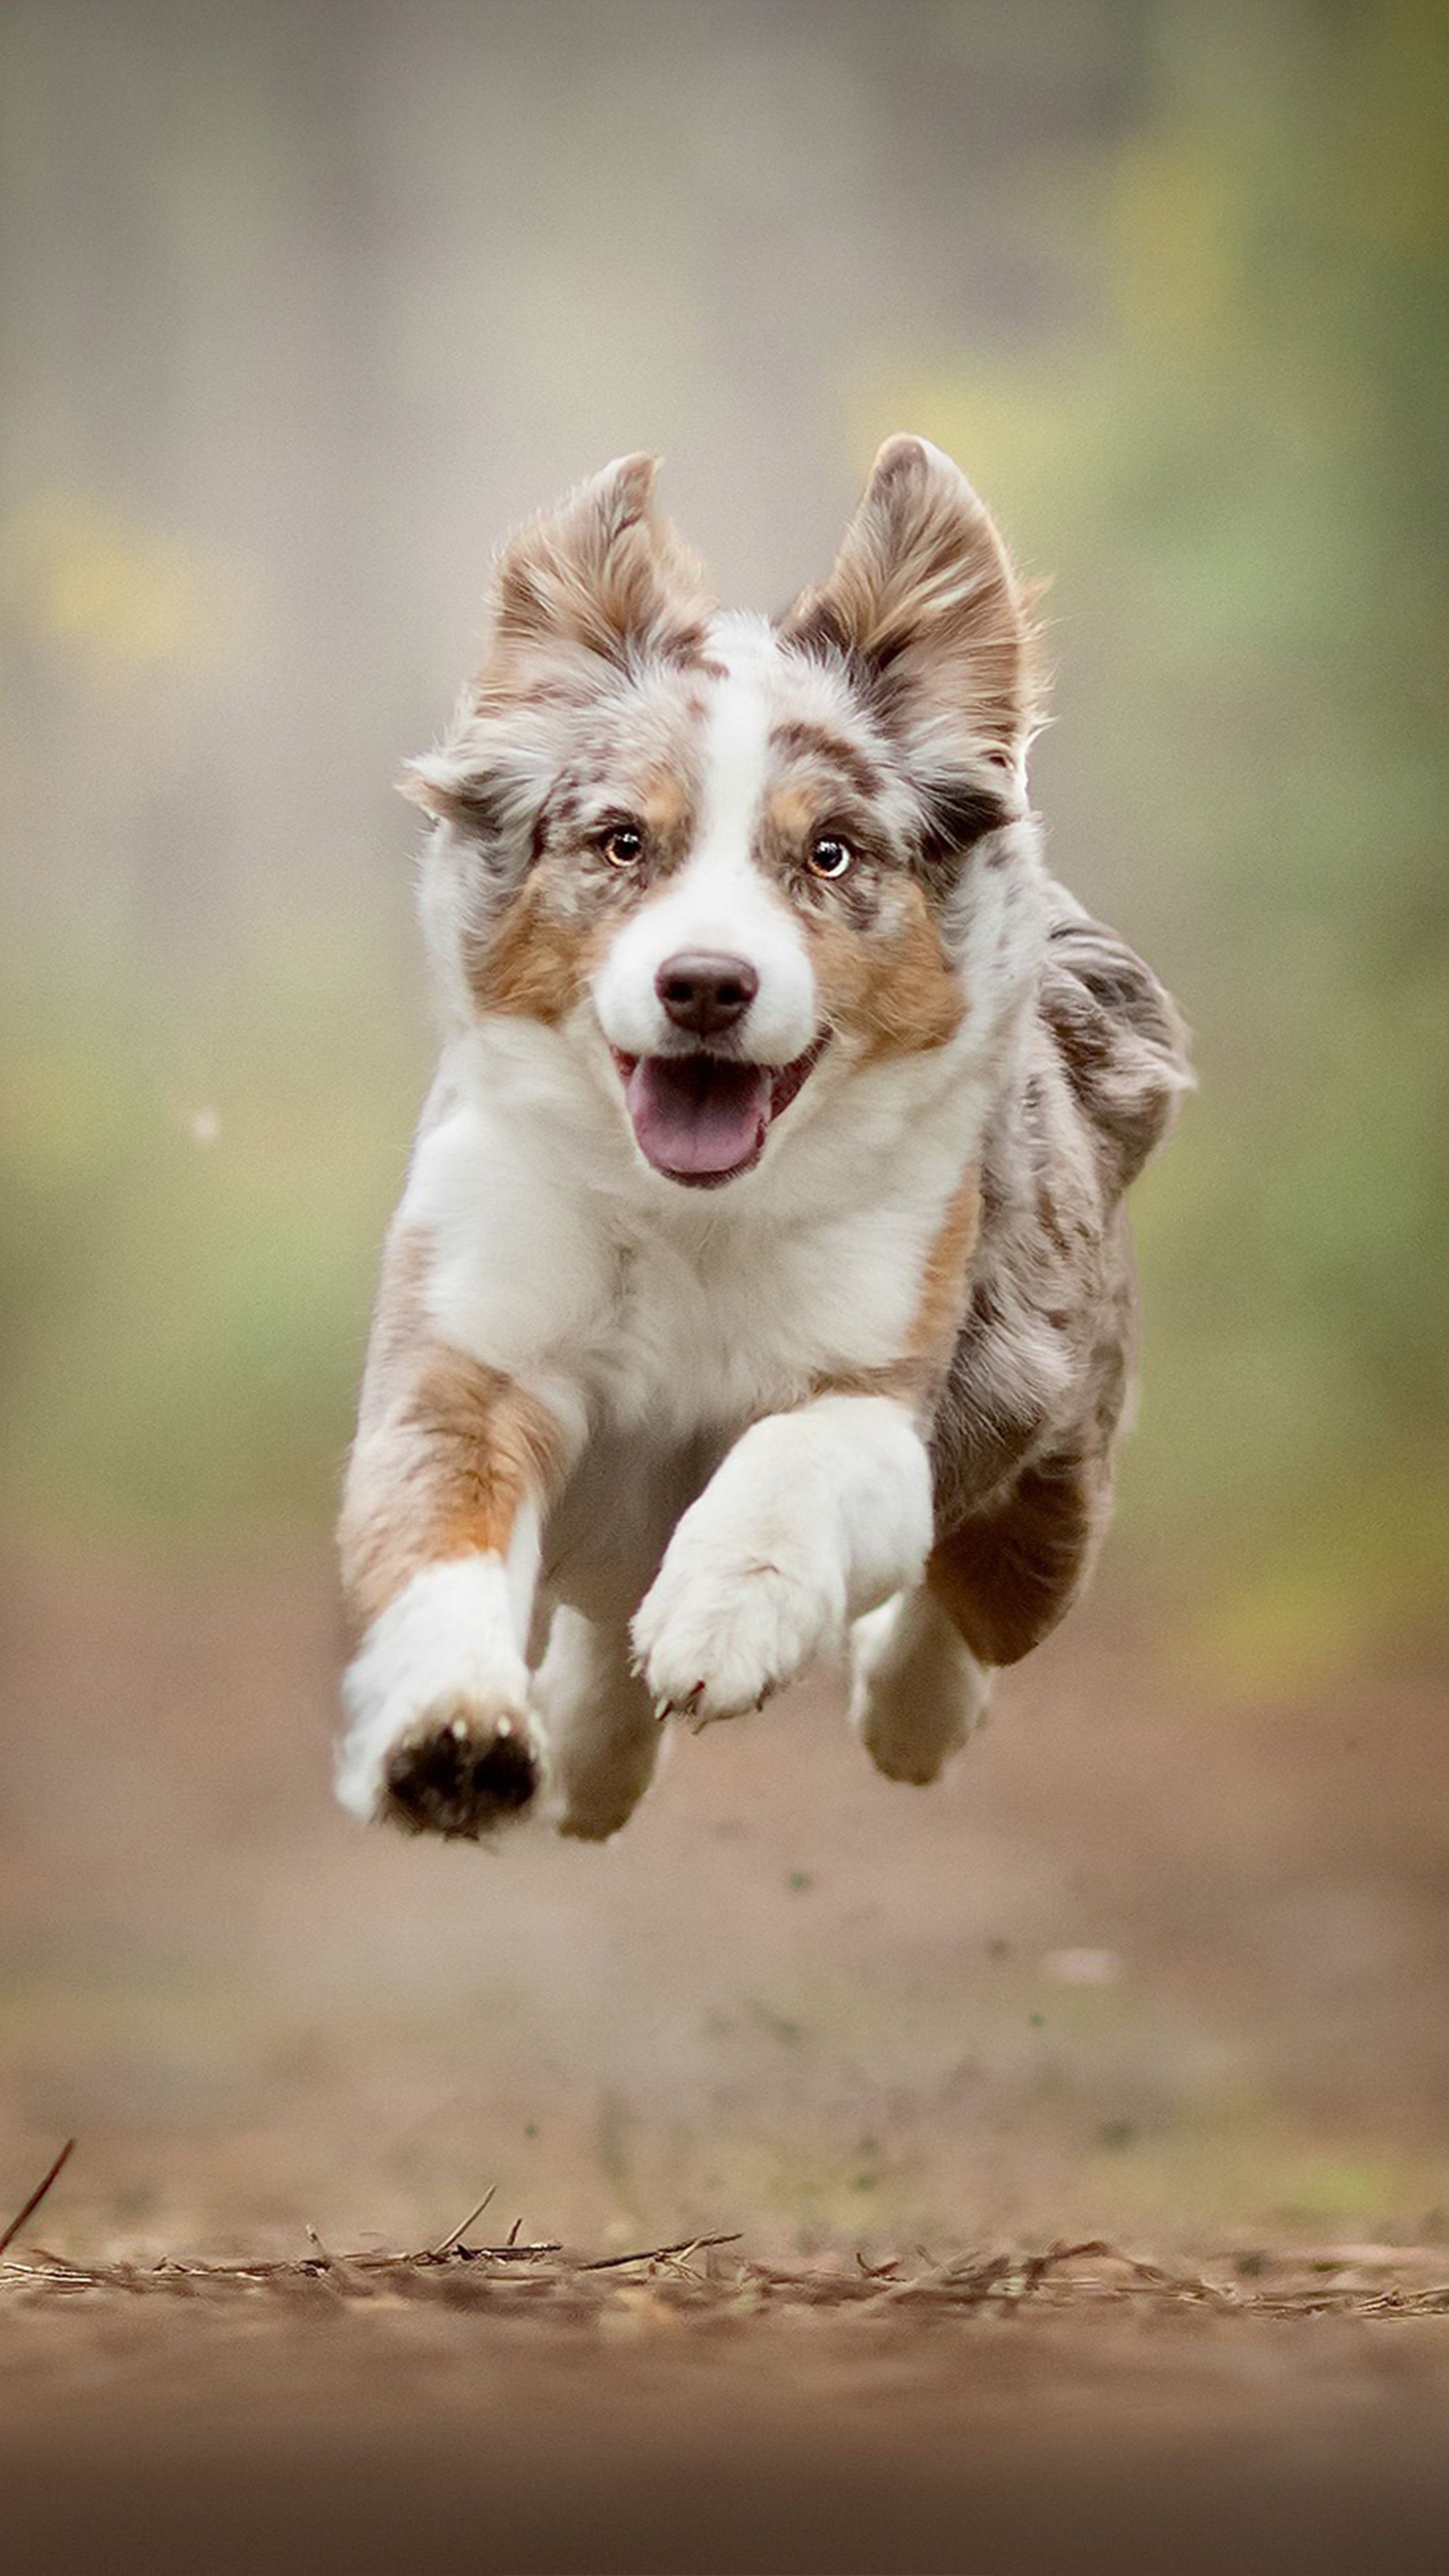 Dog Sports: Australian Shepherd Puppy, Training Course, The Cowboy's Herding Breed. 2160x3840 4K Wallpaper.